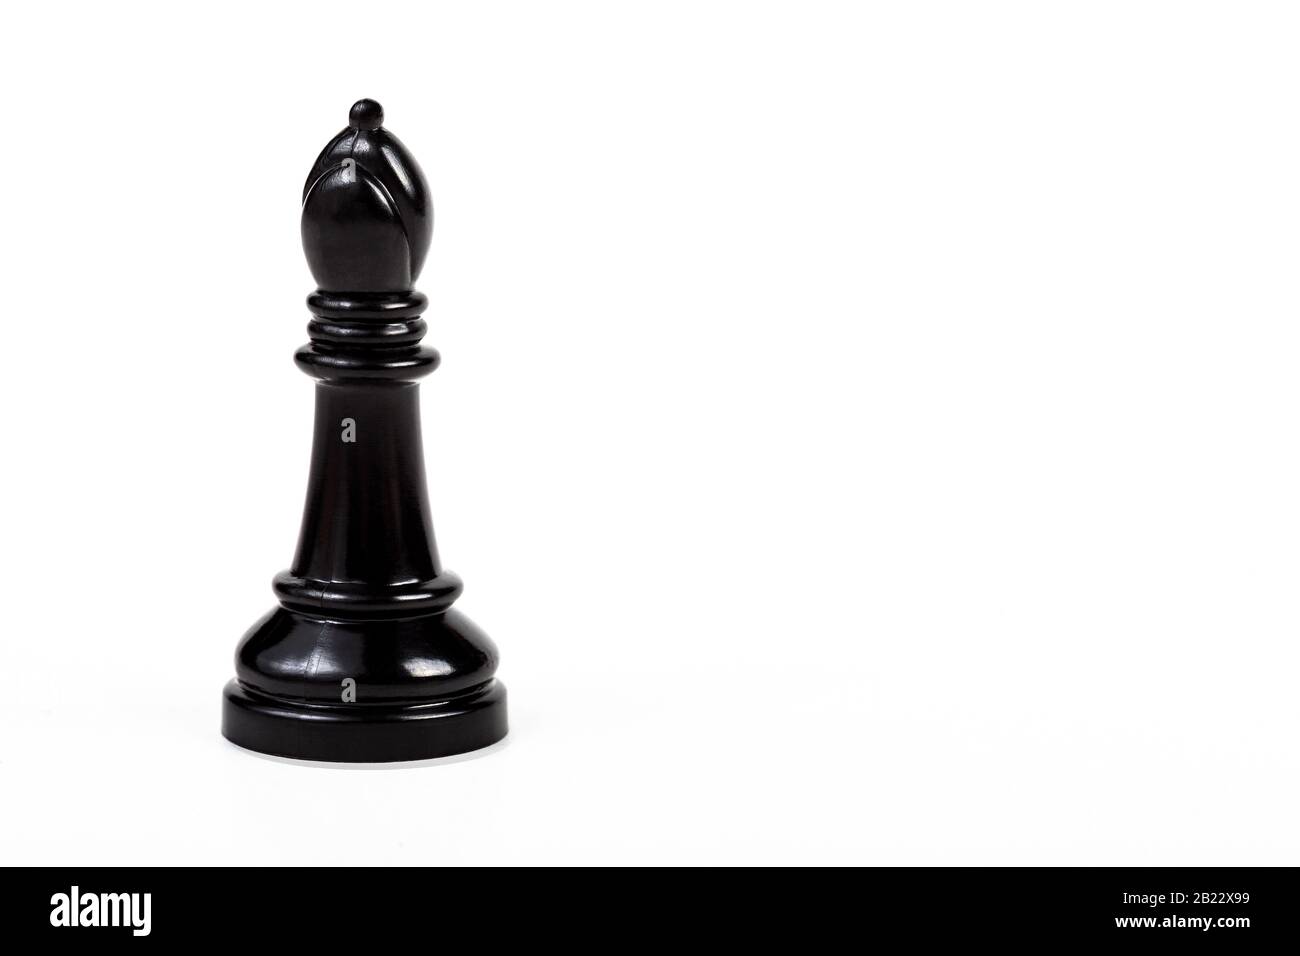 Simple one single shiny black bishop chess piece figure alone ...